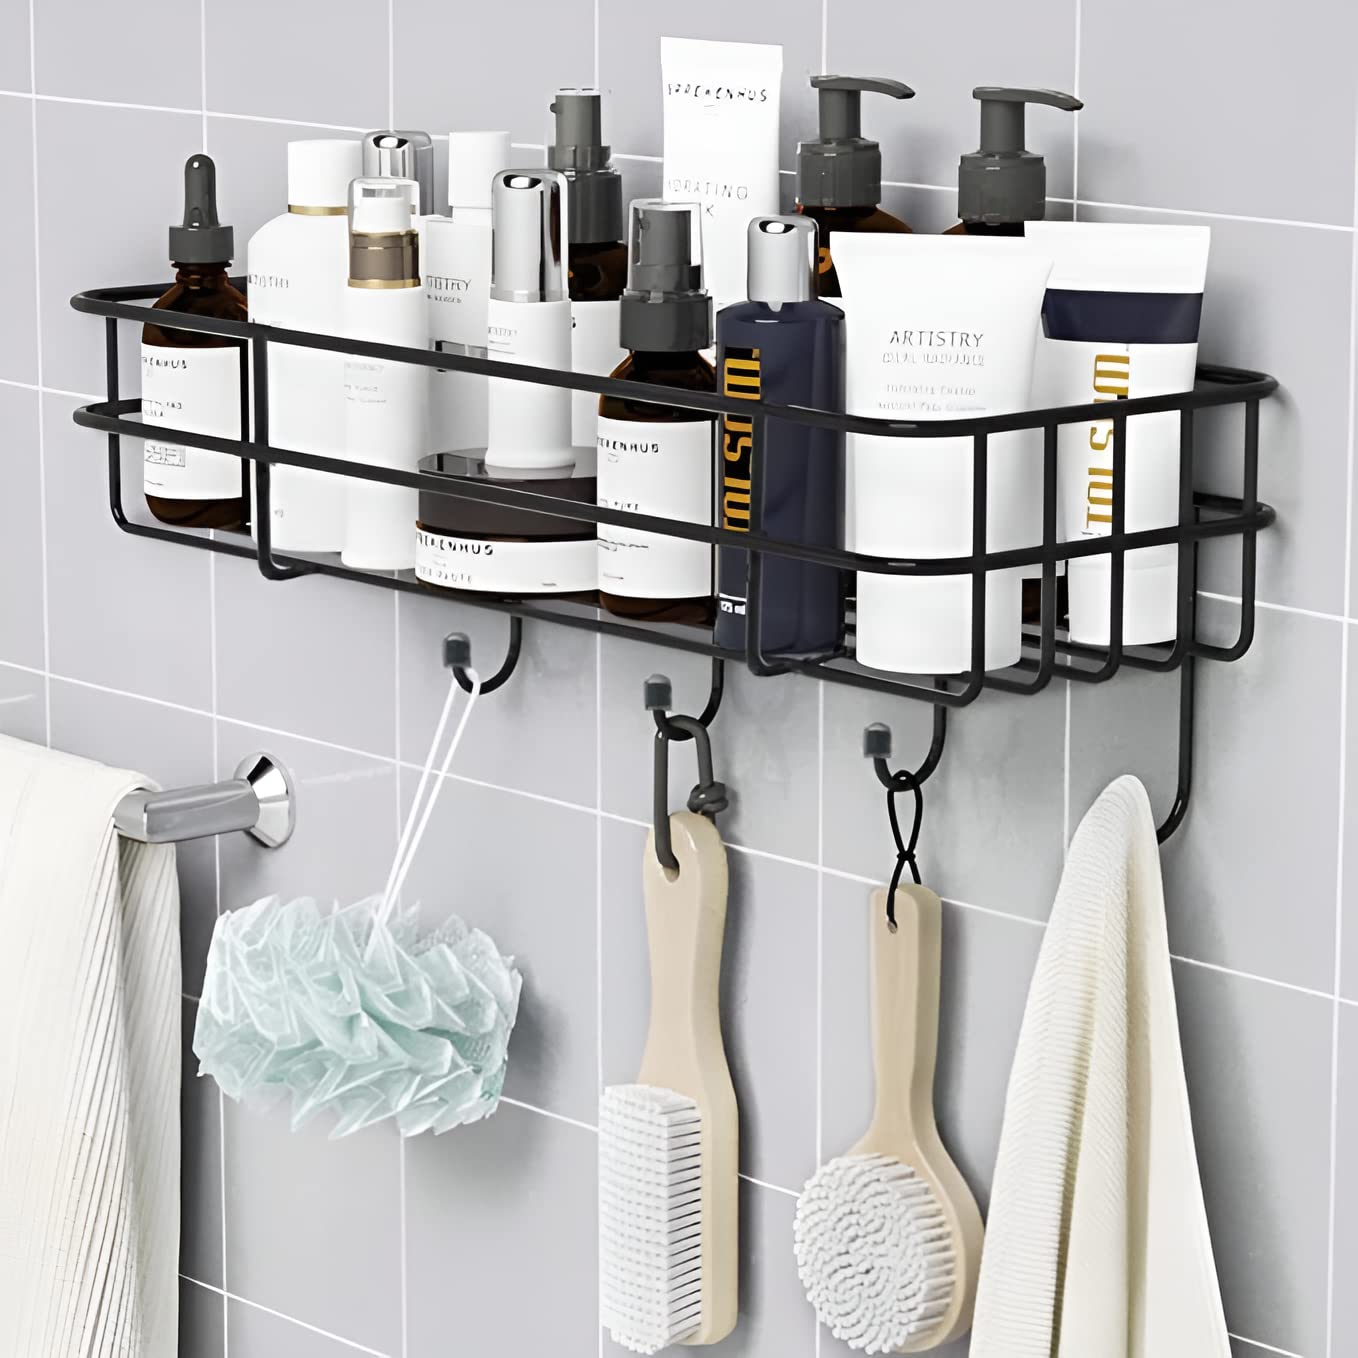 Plantex GI Steel Self-Adhesive Multipurpose Bathroom Shelf with Hooks/Towel Holder/Rack/Bathroom Accessories-Wall Mount - Pack of 1 (Black,Powder Coated)